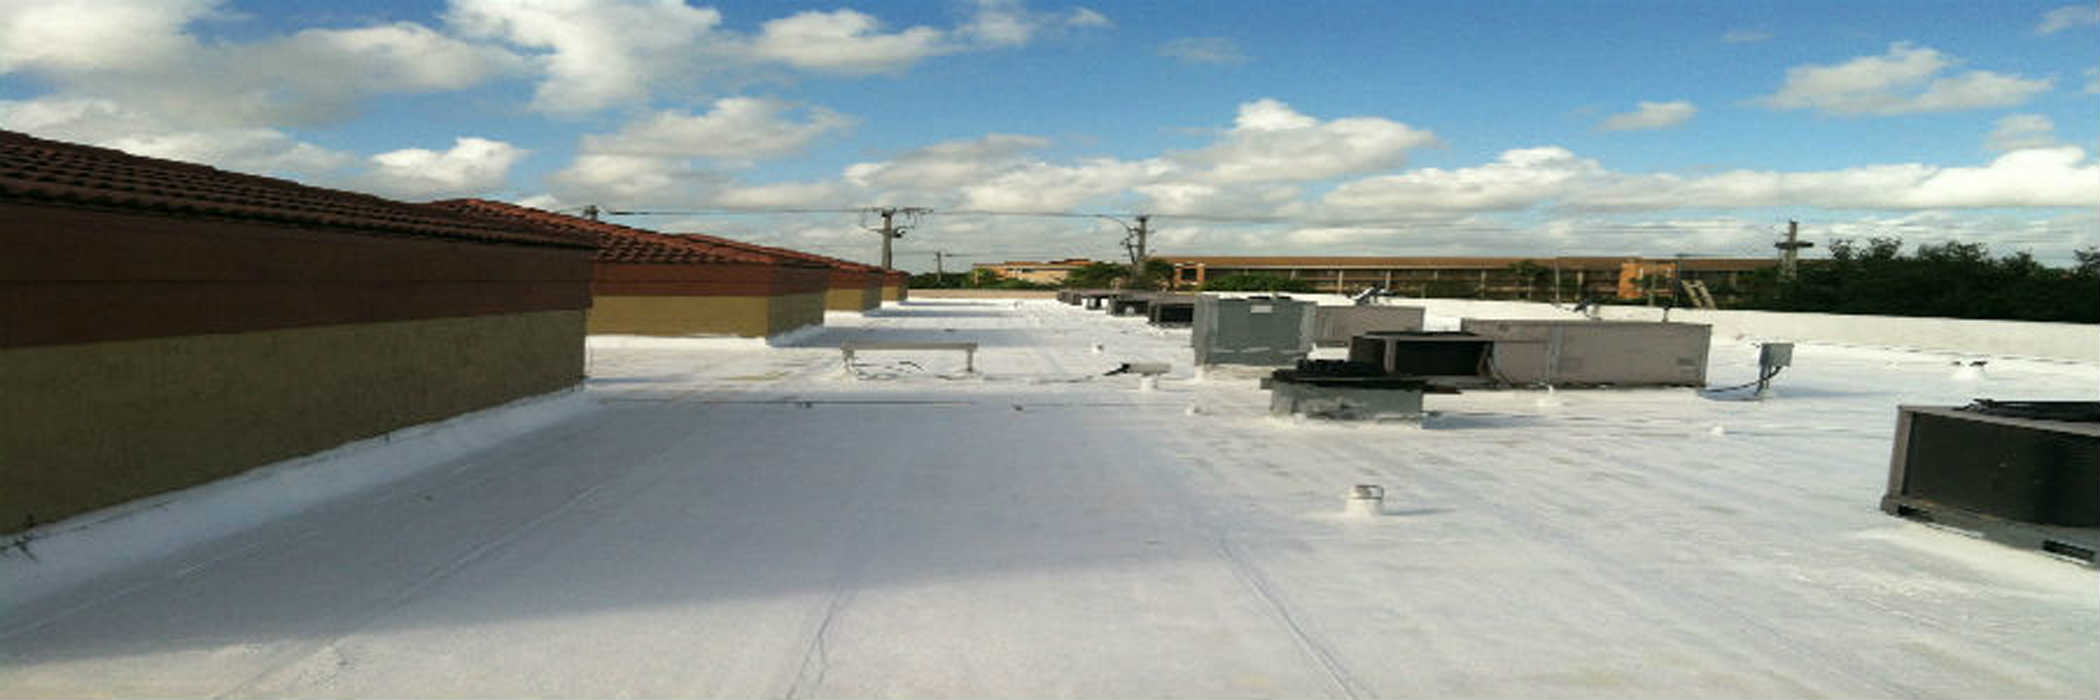 Roof Tile Coating